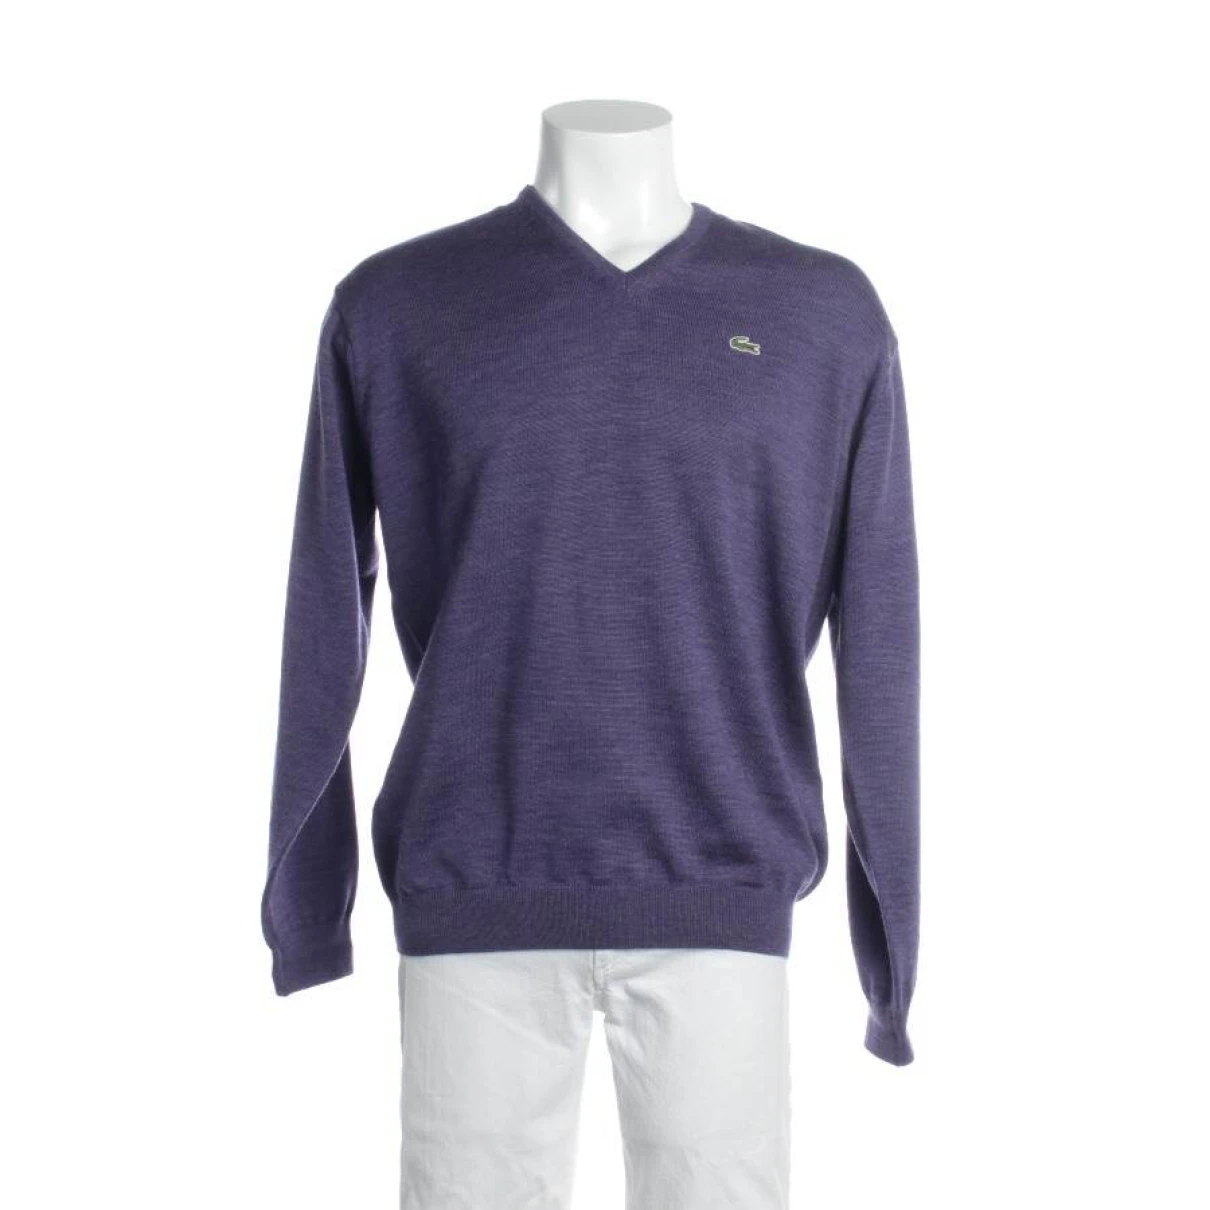 Pre-owned Lacoste Wool Pull In Purple